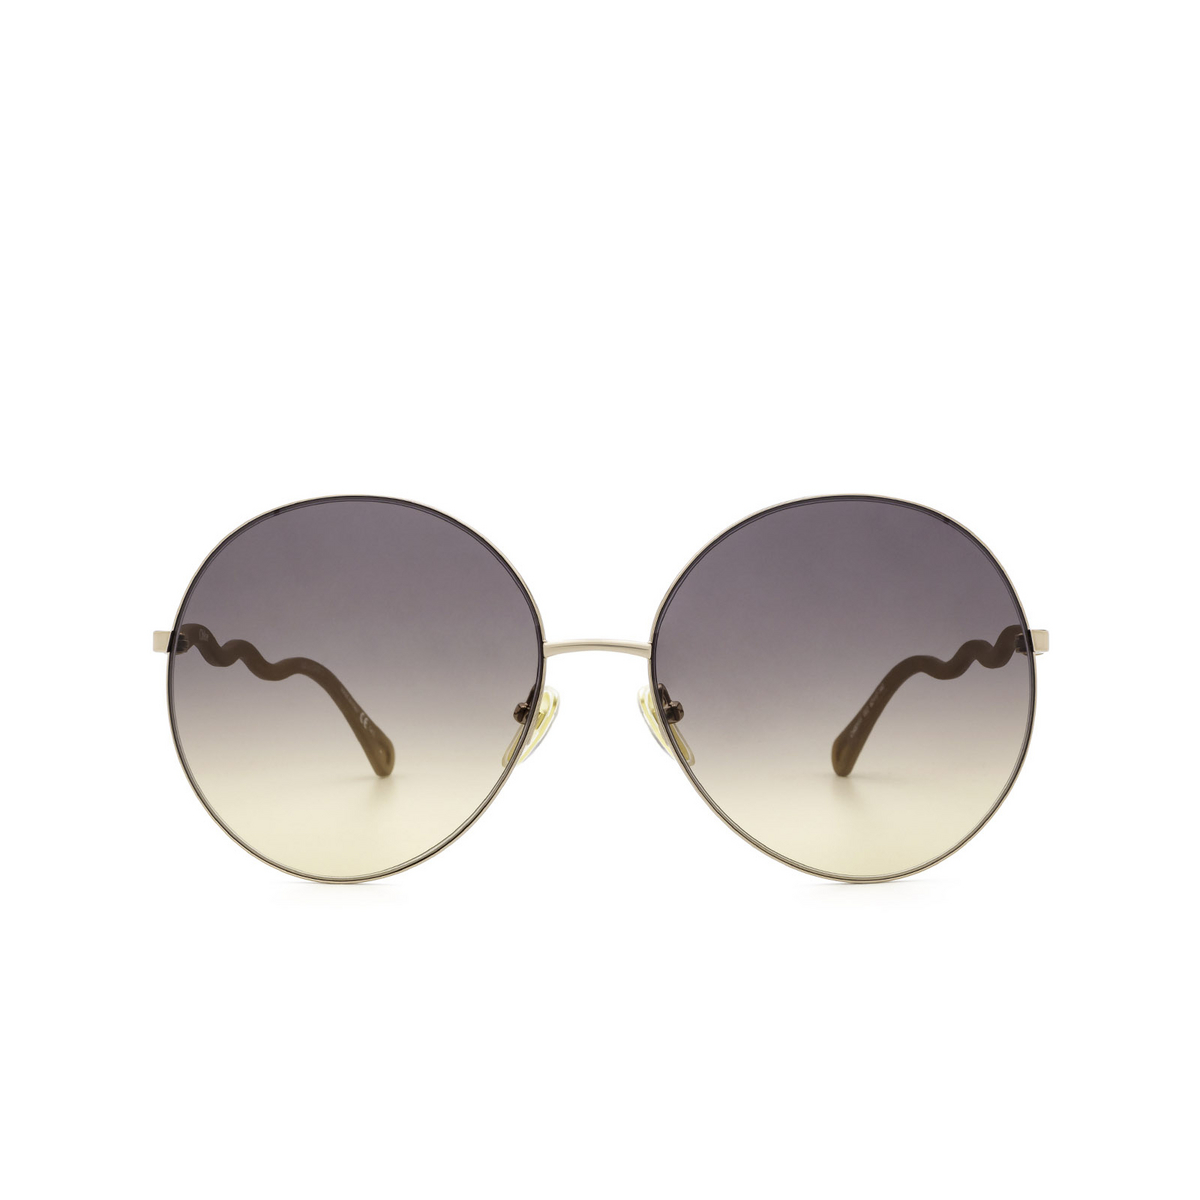 Chloé® Round Sunglasses: CH0055S color Beige 002 - front view.